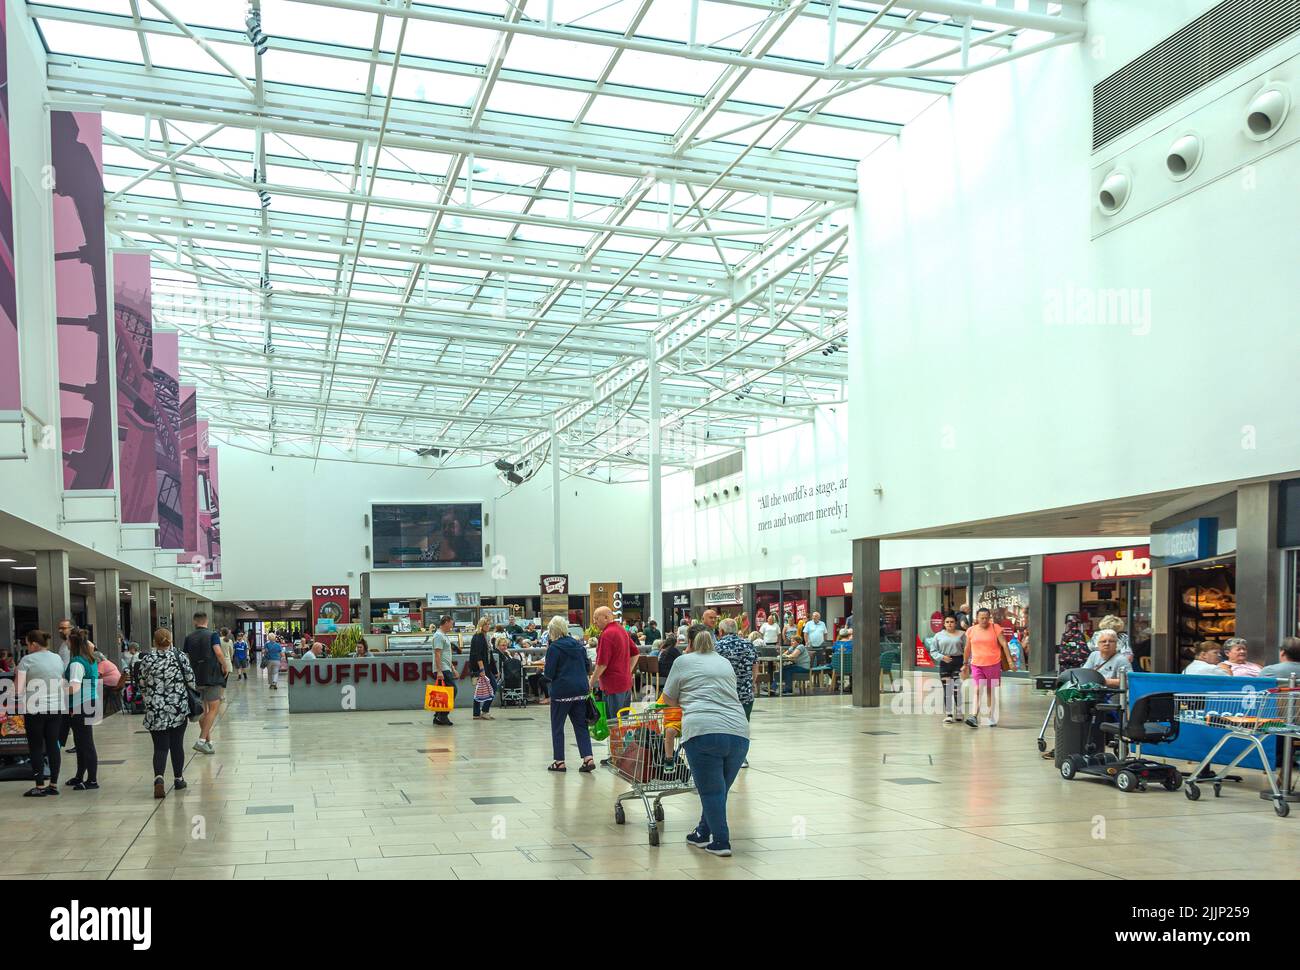 Atrio interior, Galleries Shopping Centre, Washington, Tyne and Wear, Inglaterra, Reino Unido Foto de stock